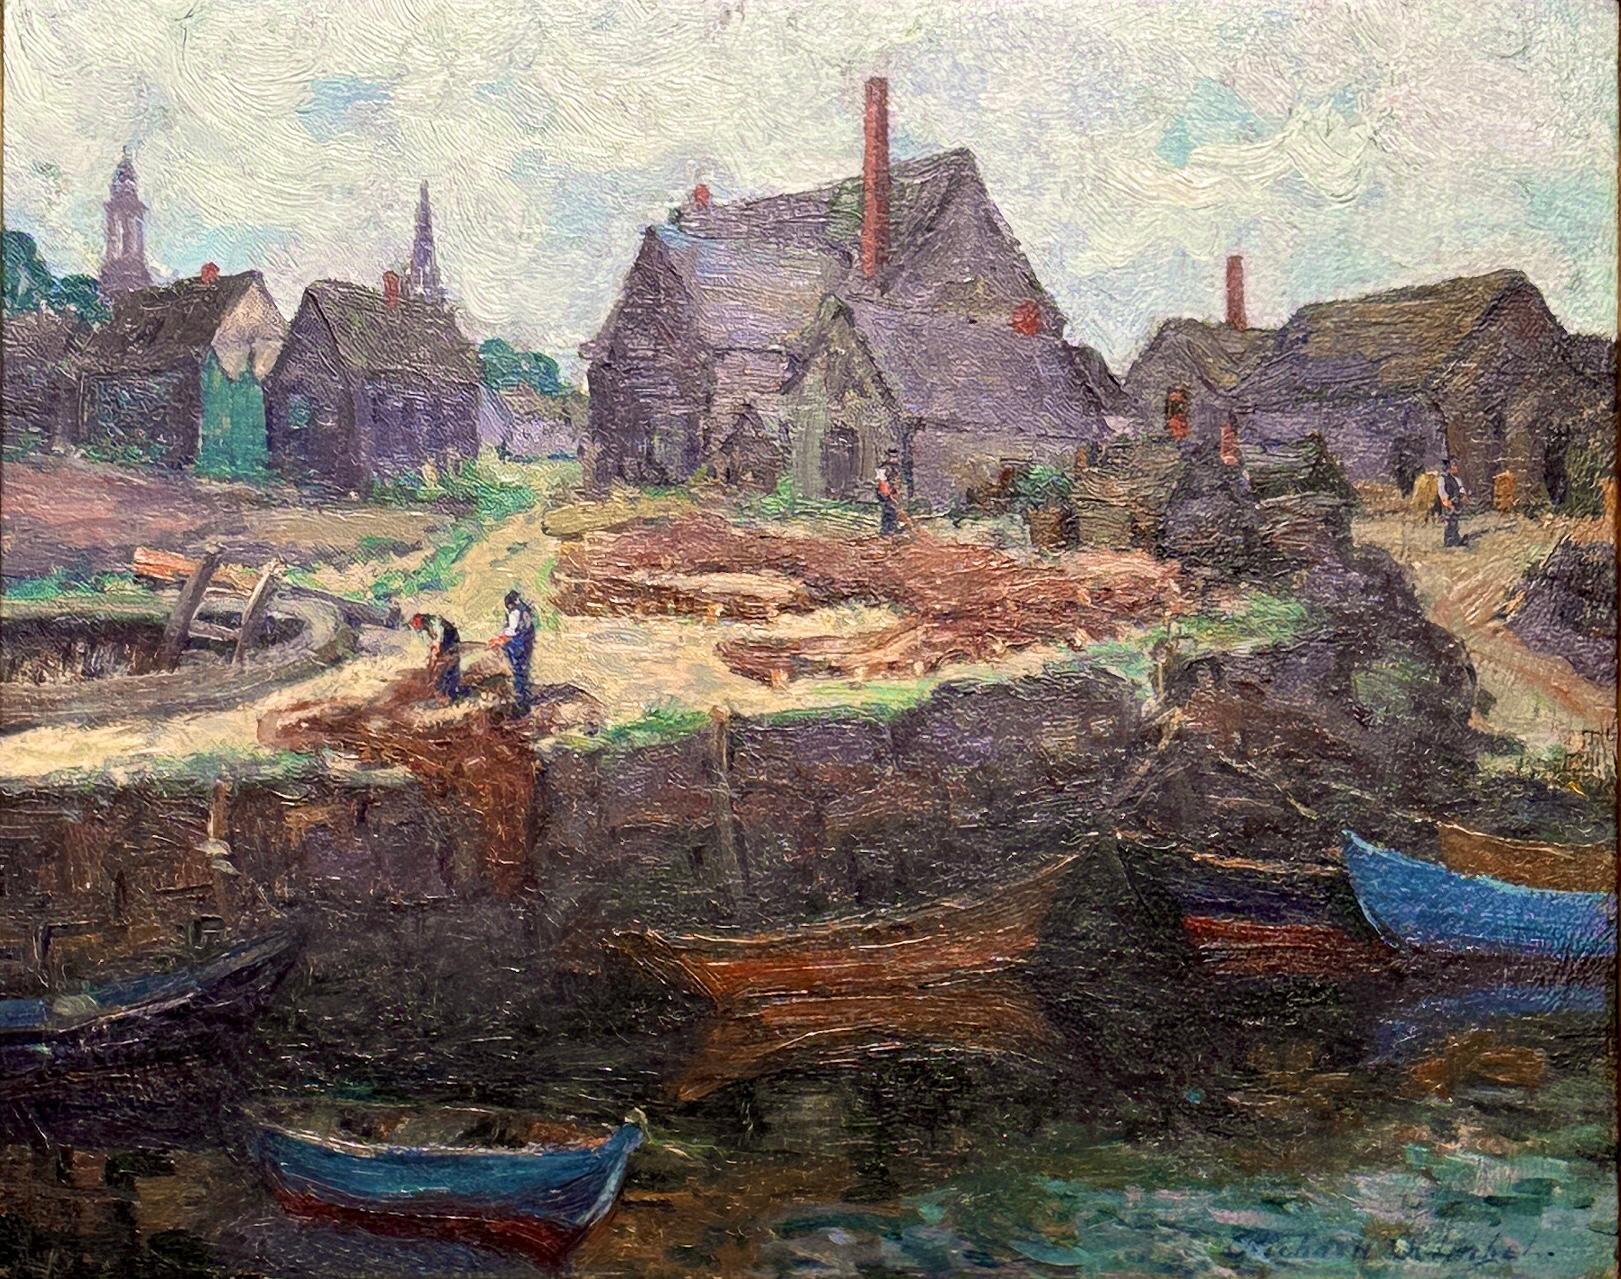 Landscape Painting Richard Kimbel - Mending Nets, Rockport, MA, cou en peau d'ours Seascape of Fishermen working